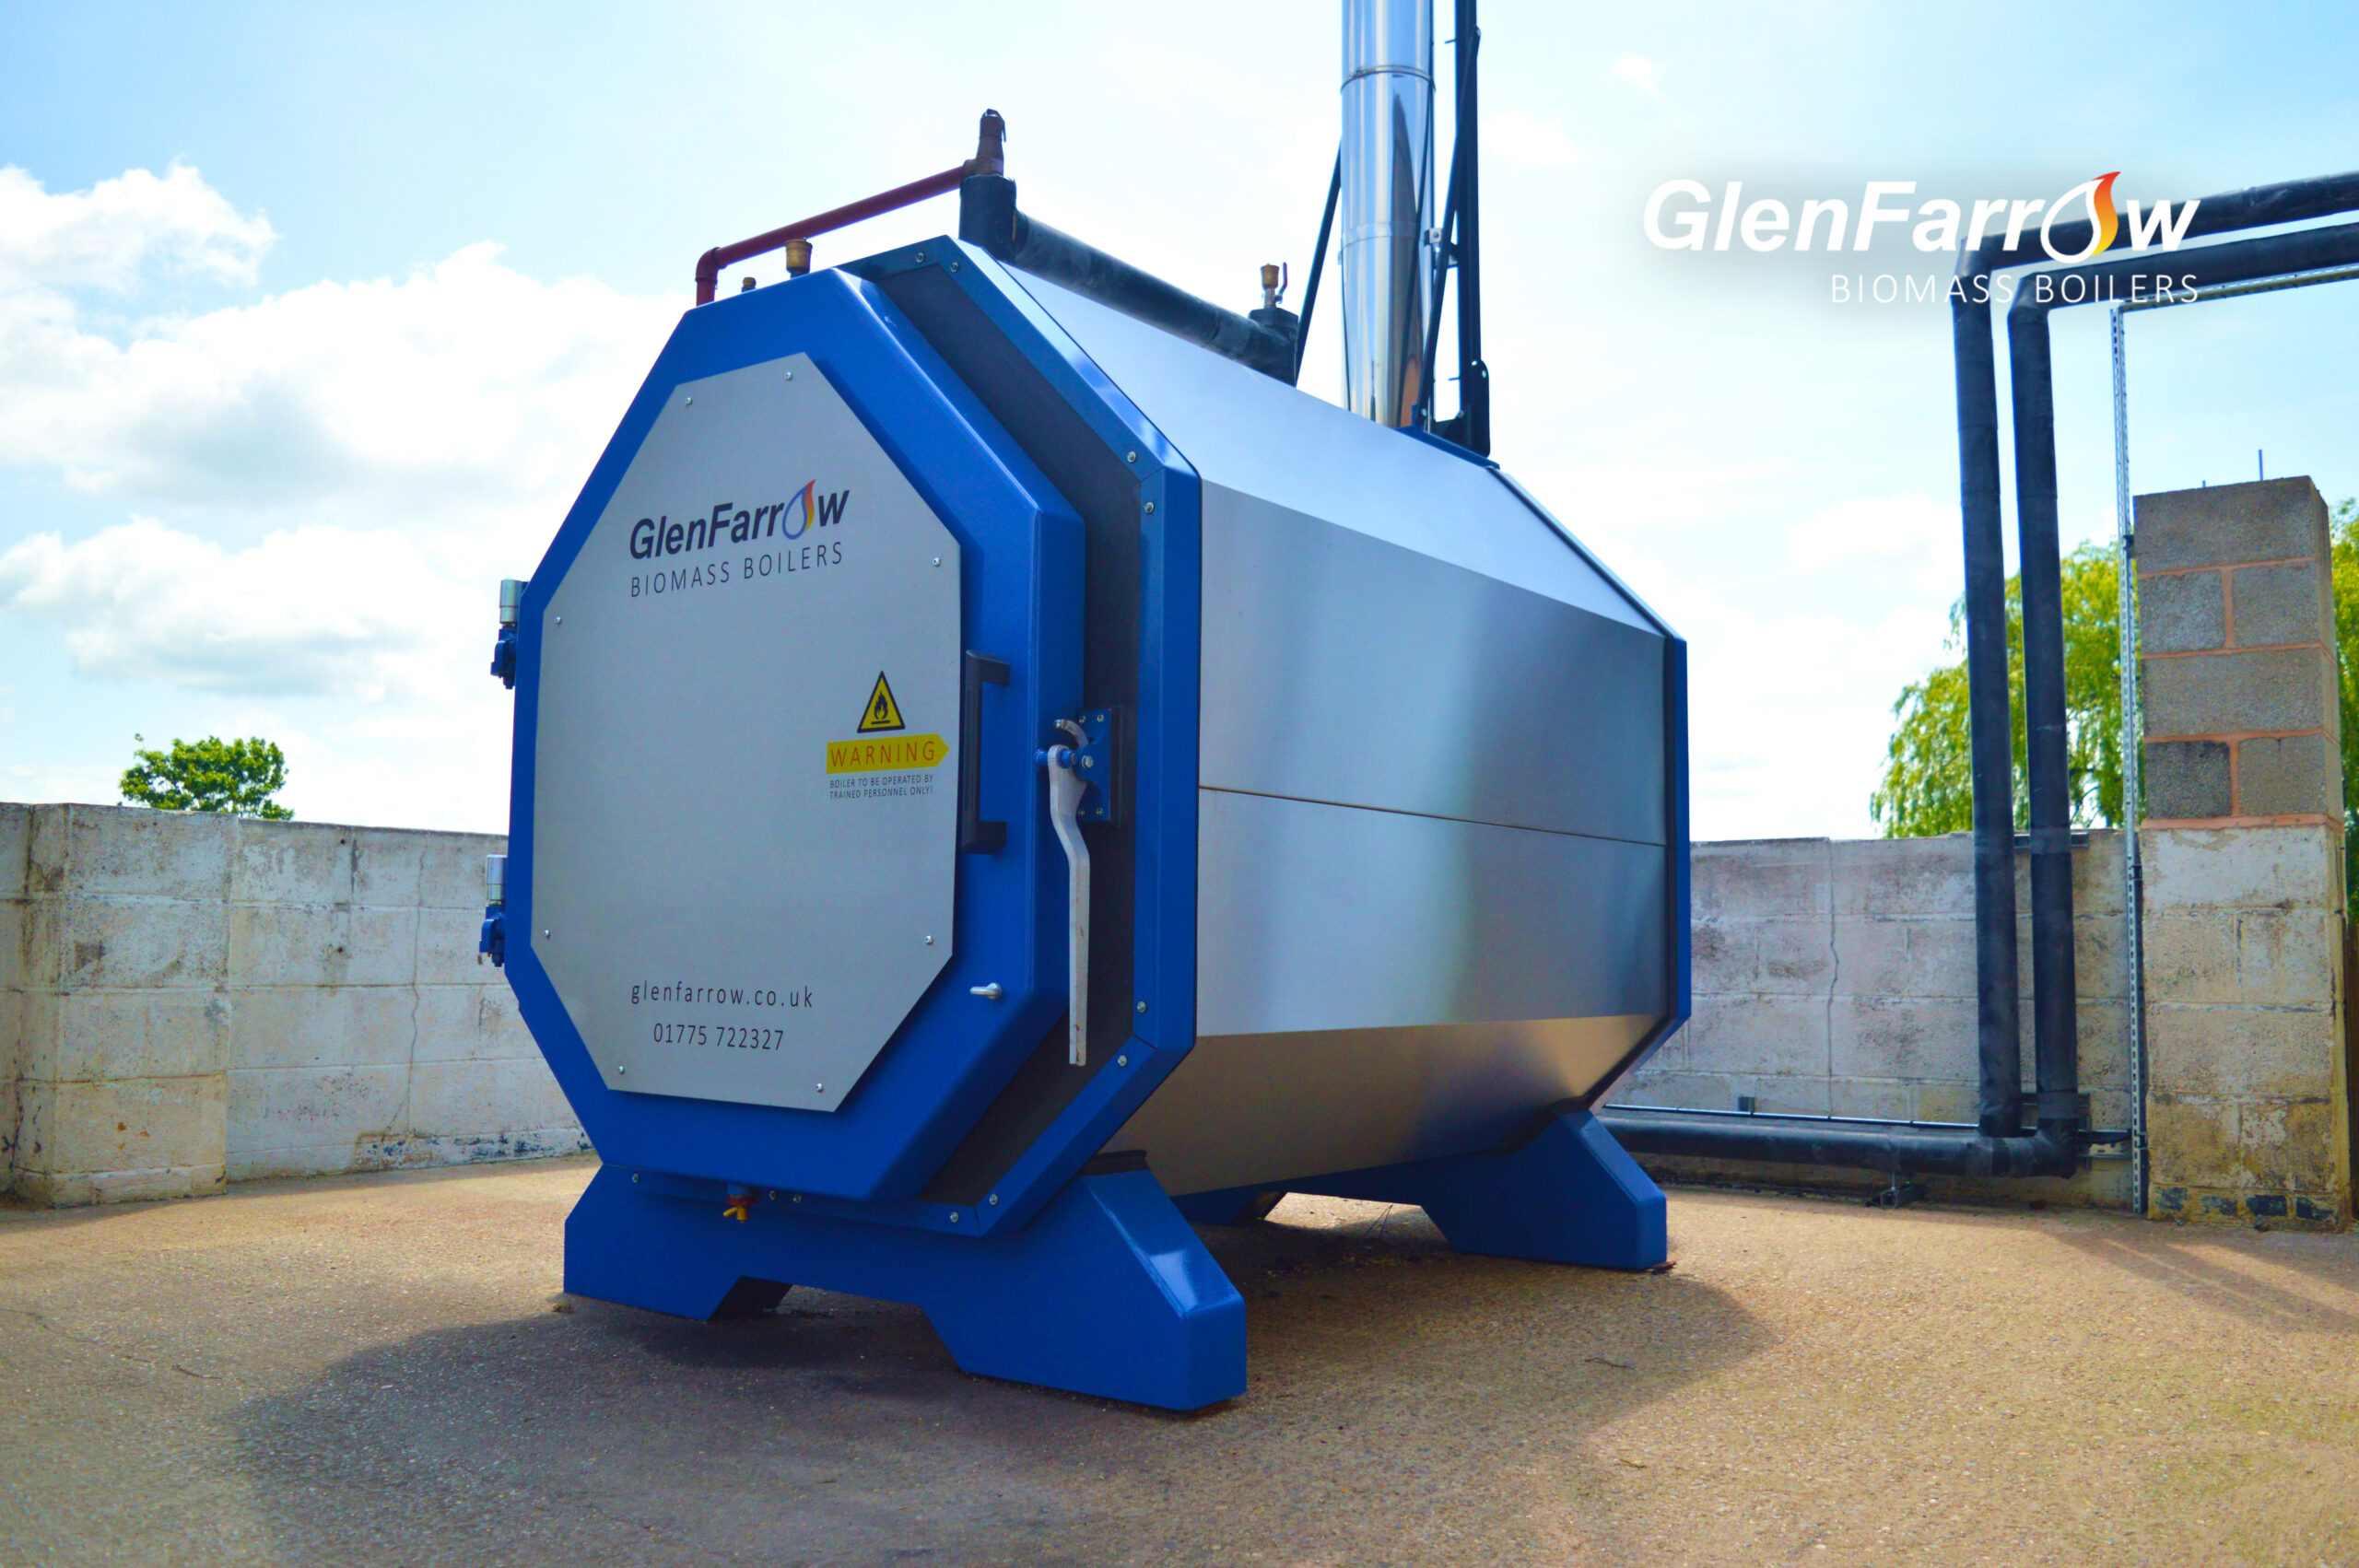 GlenFarrow biomass boiler